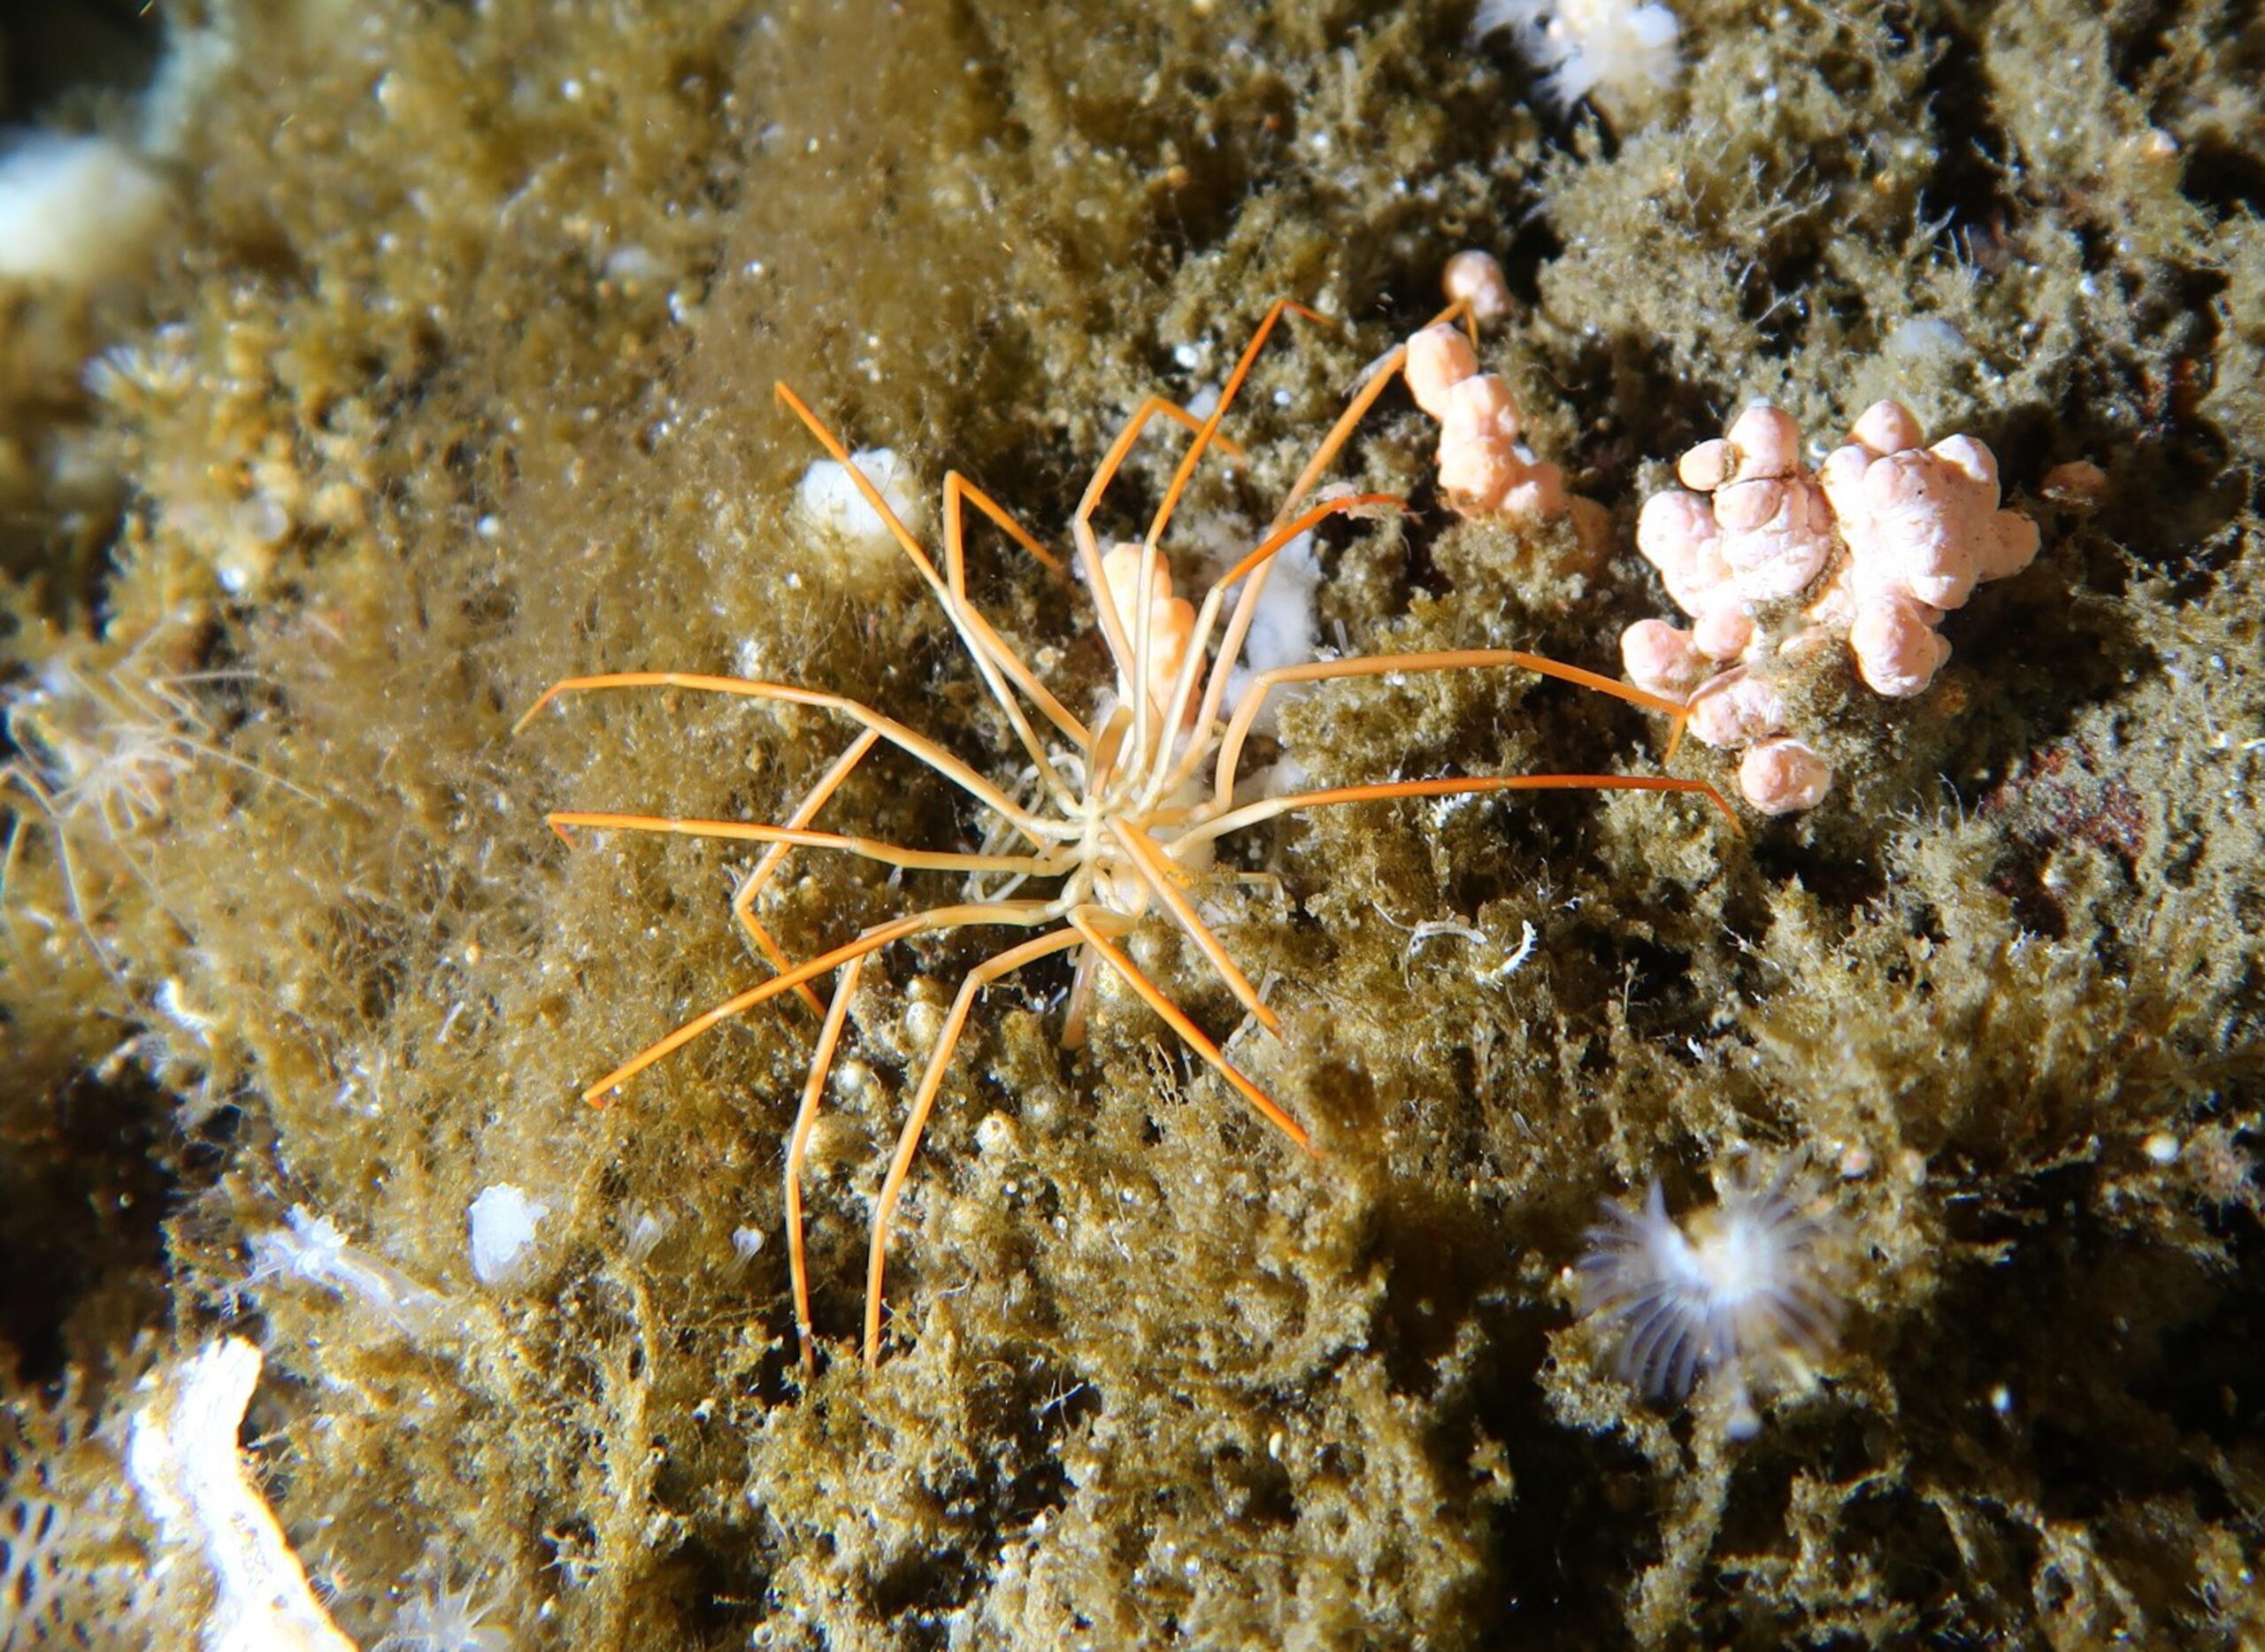 A yellow, multi-legged giant Antarctic sea spider.